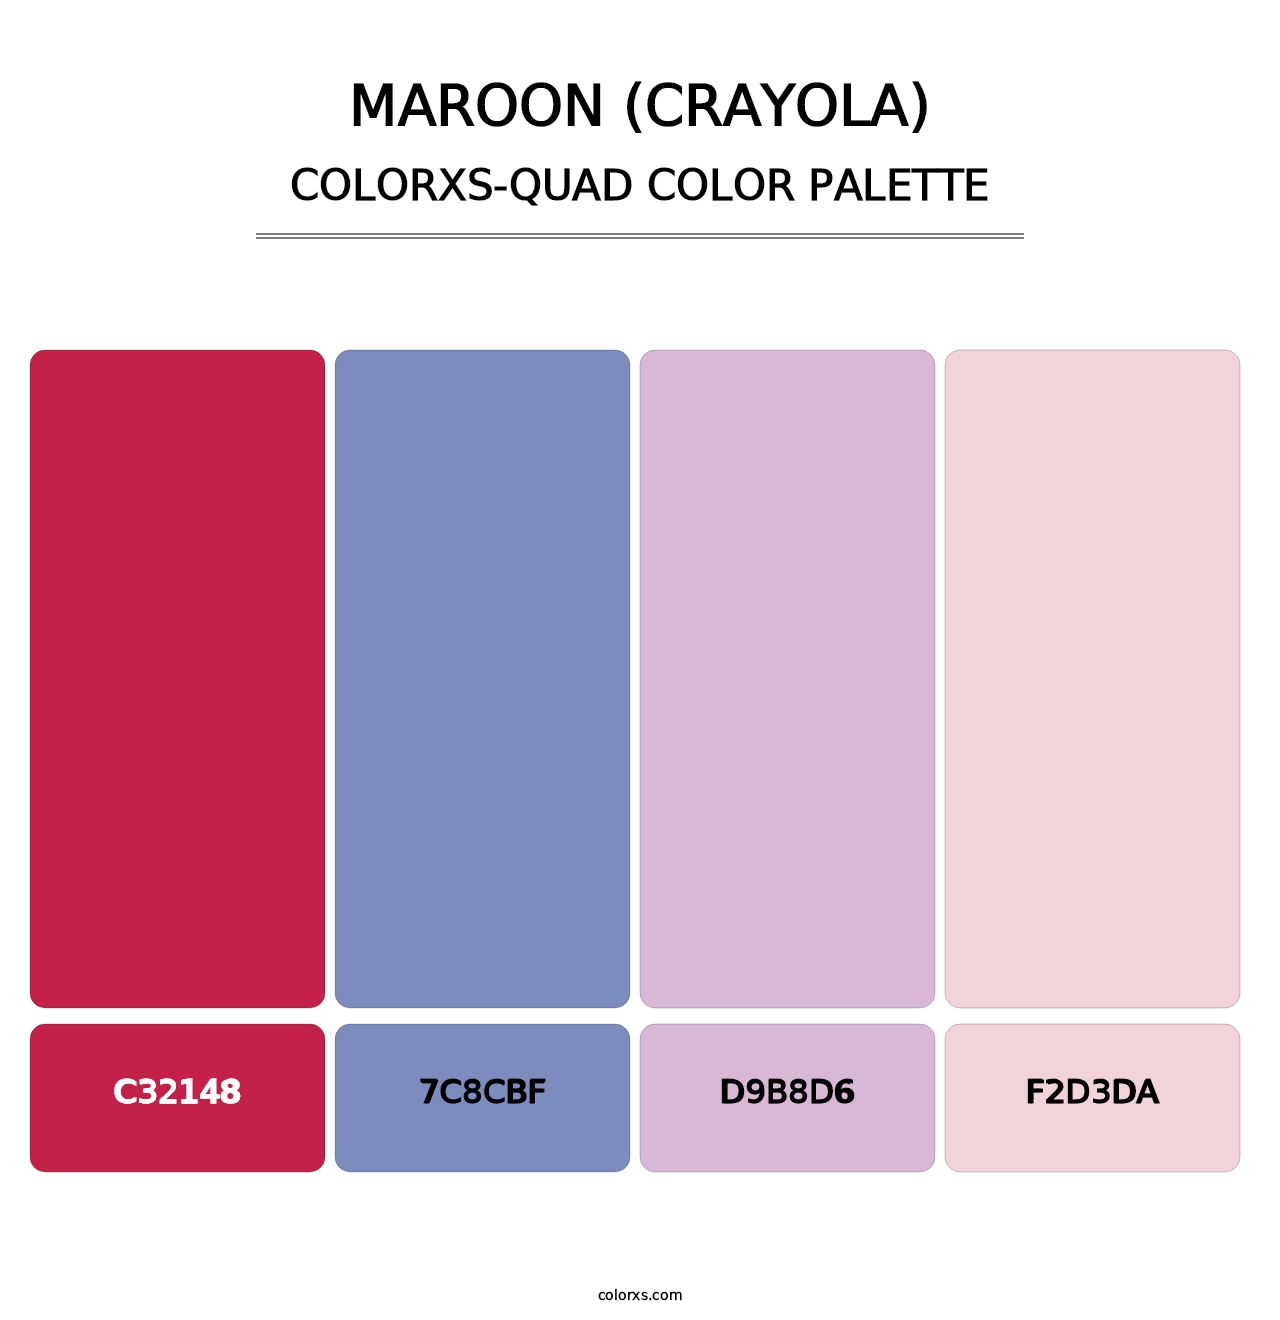 Maroon (Crayola) - Colorxs Quad Palette